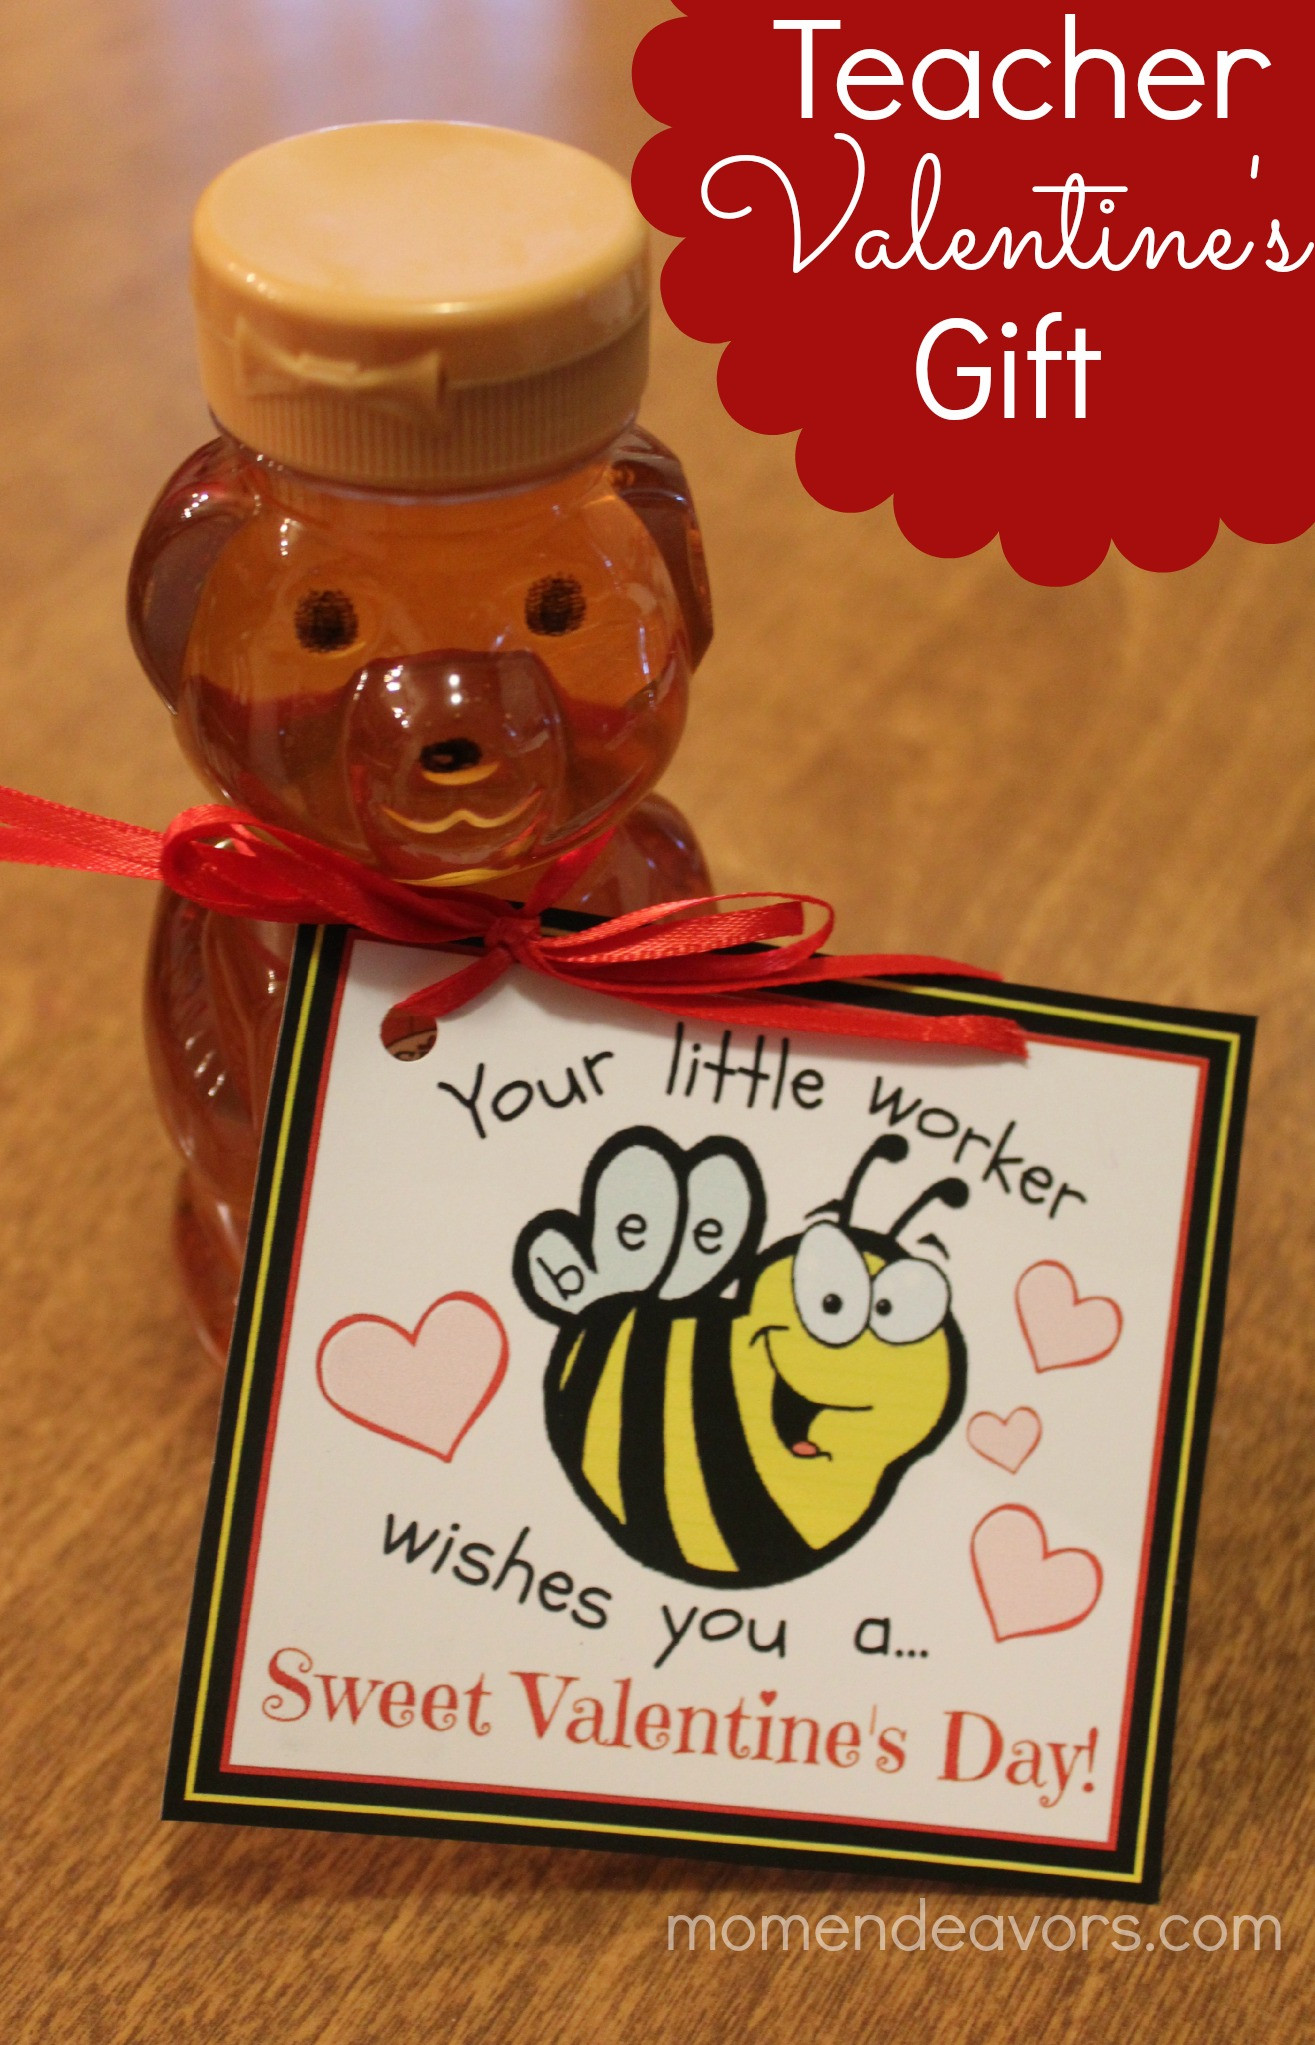 Valentines Gift Ideas For Teachers
 Bee themed Teacher Valentine’s Gift